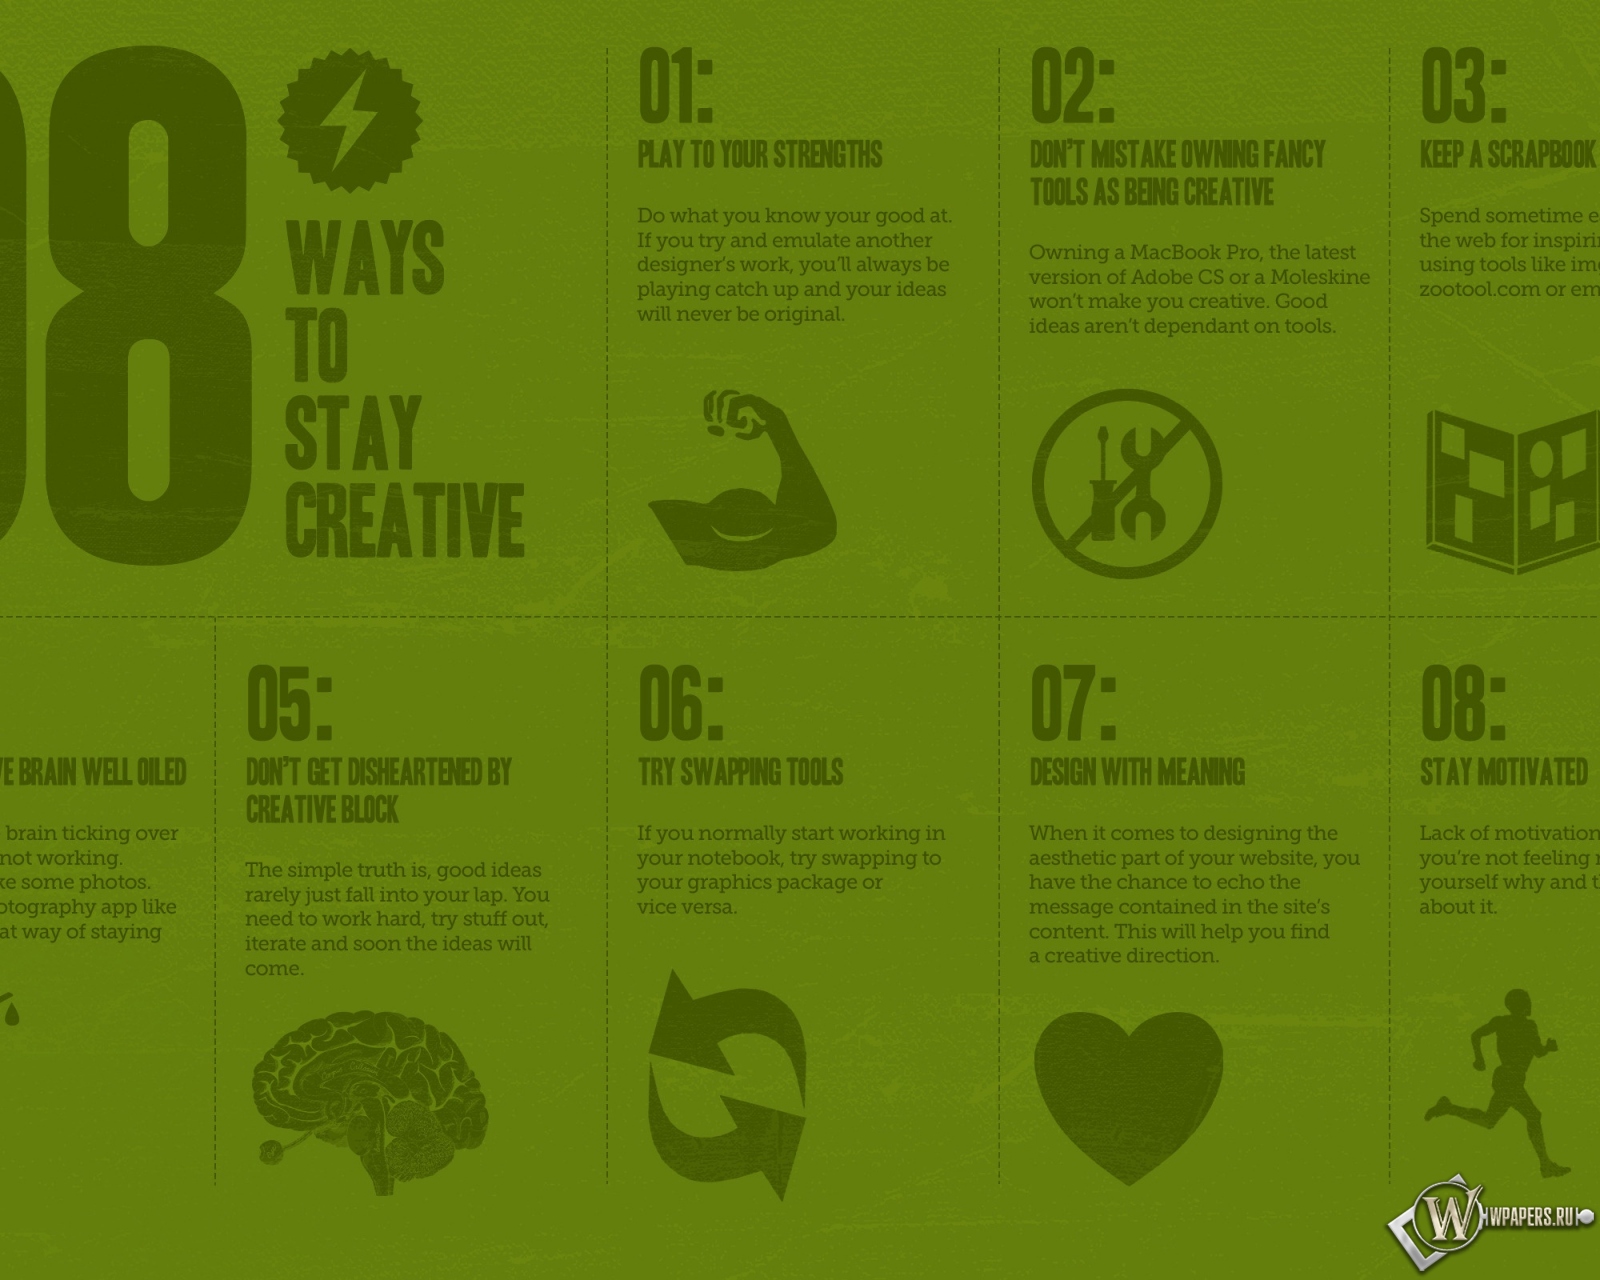 8 ways to stay creative 1600x1280